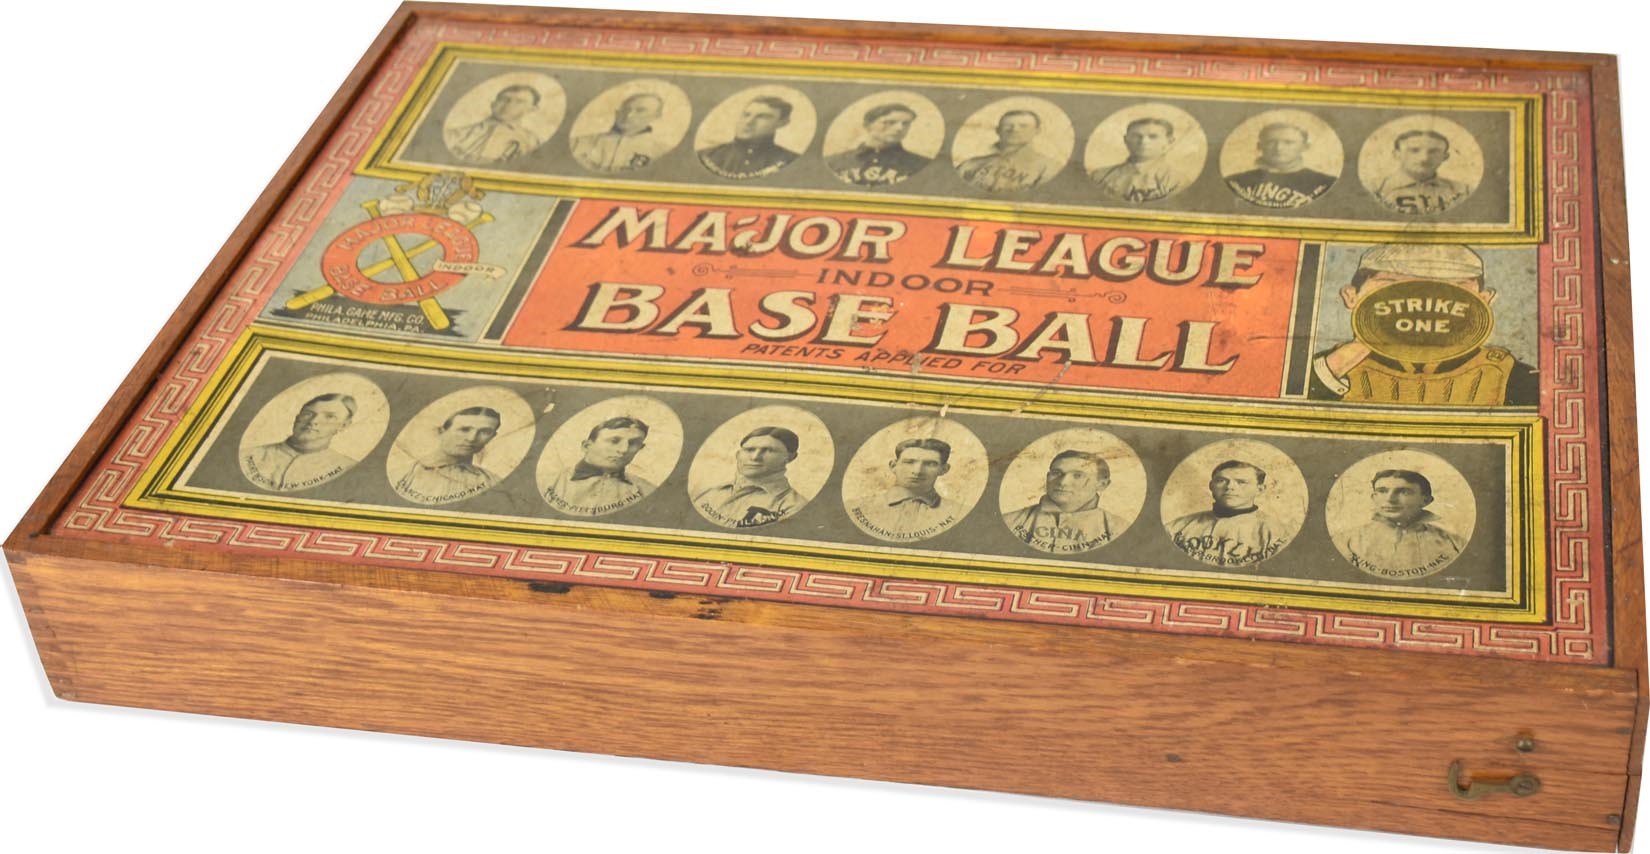 - 1913 Major League Indoor Baseball Game